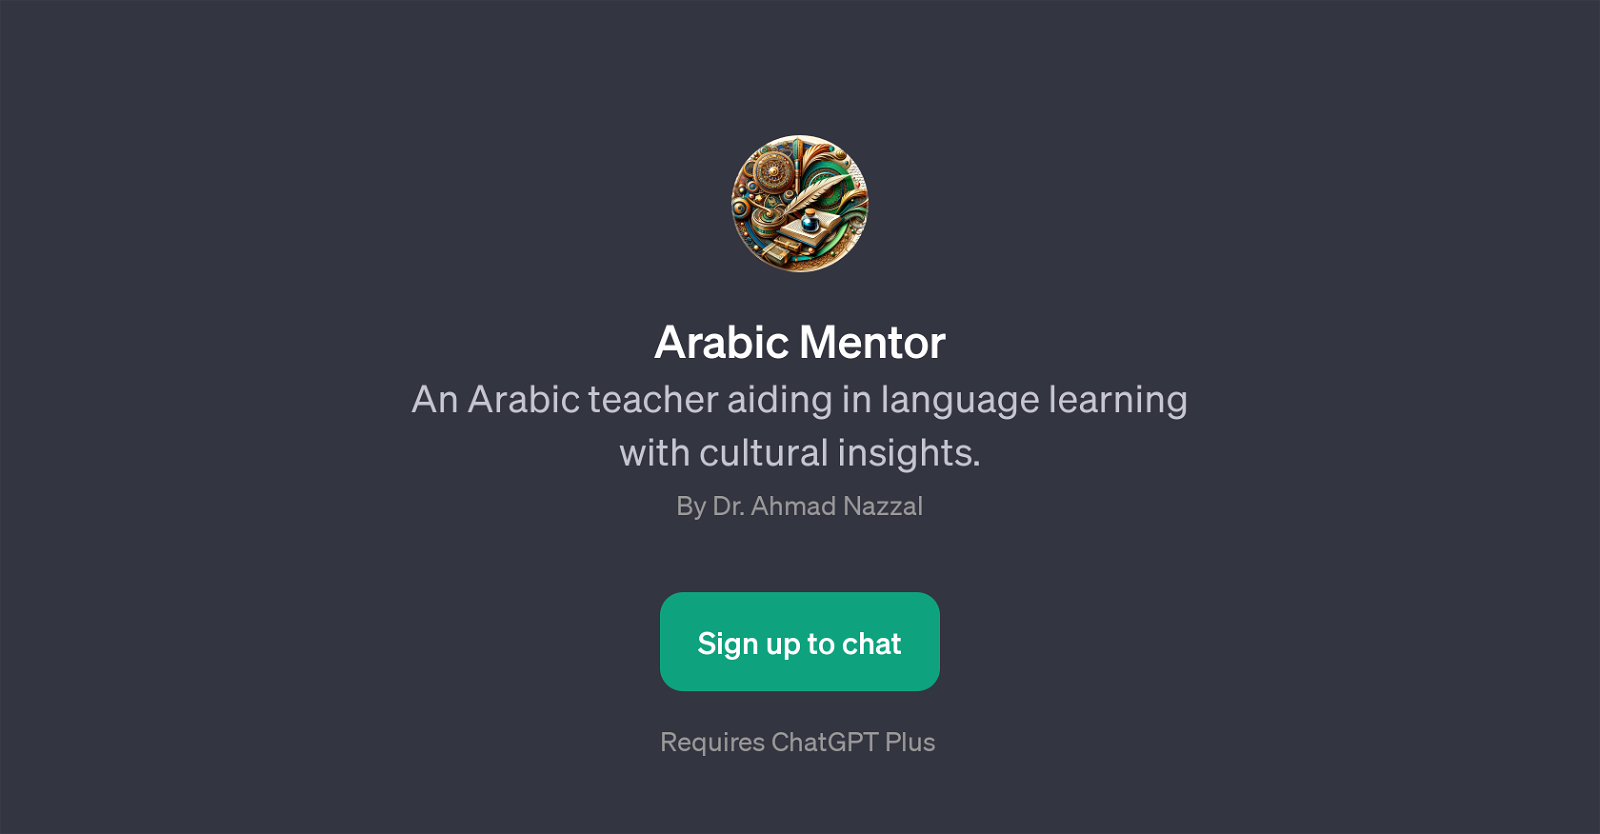 Arabic Mentor website